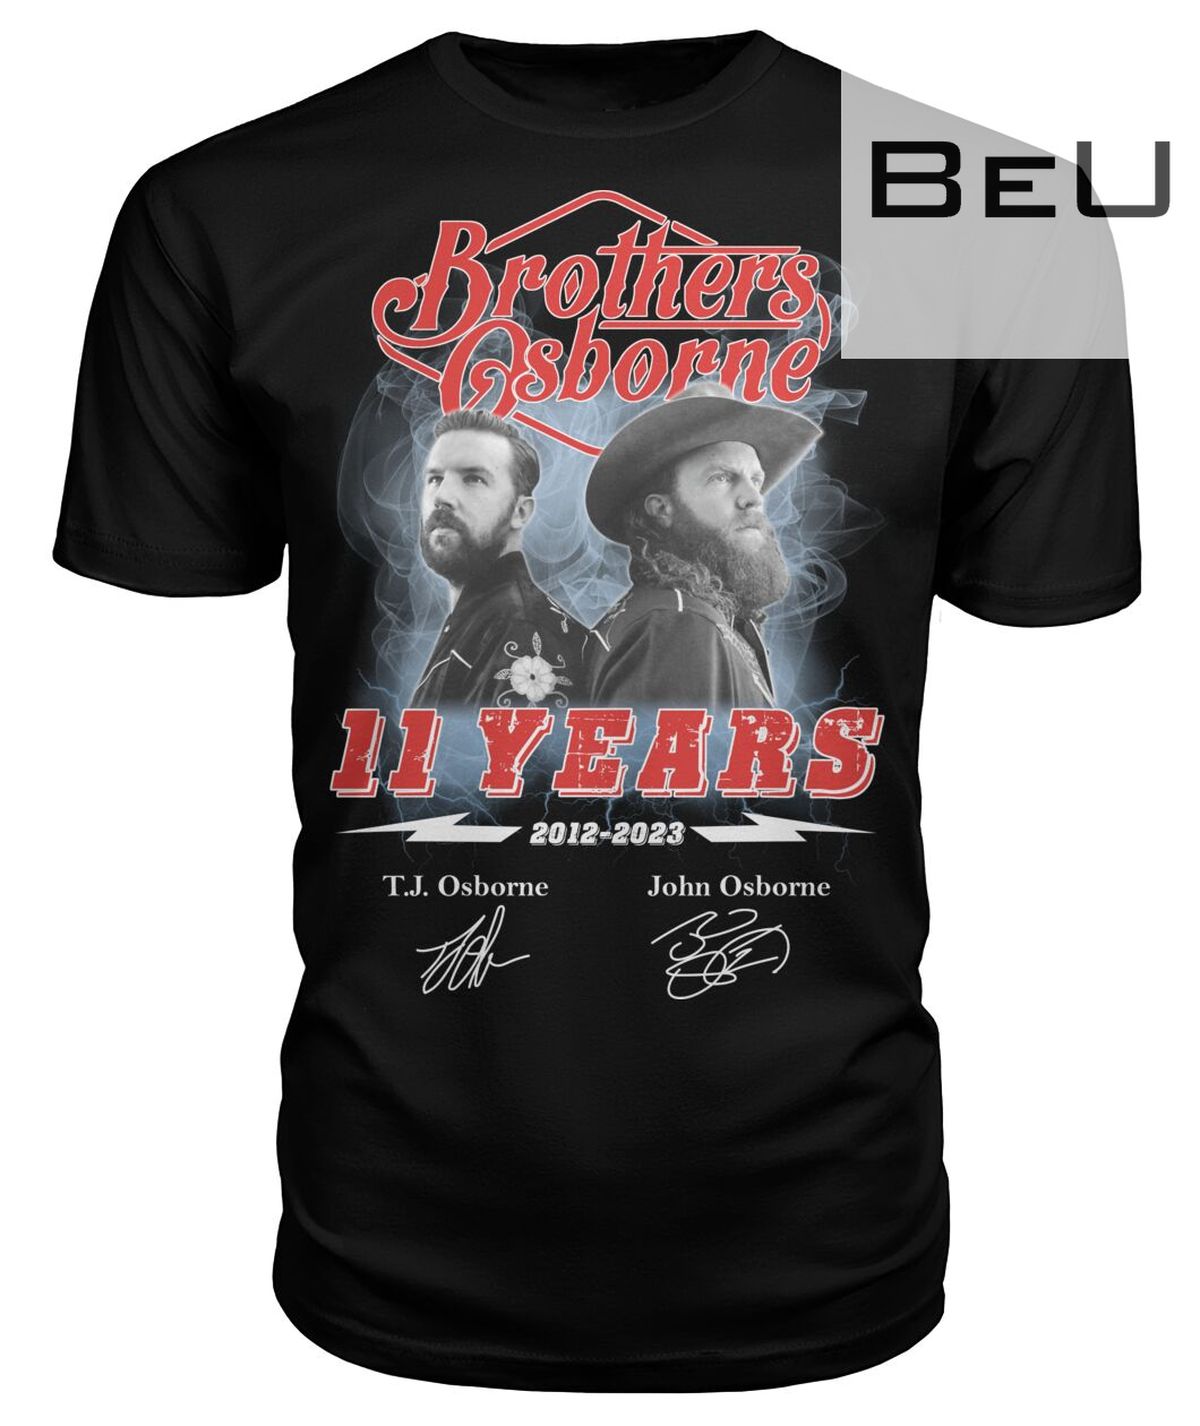 Brothers Osborne 11 Years 2012-2023 Shirt